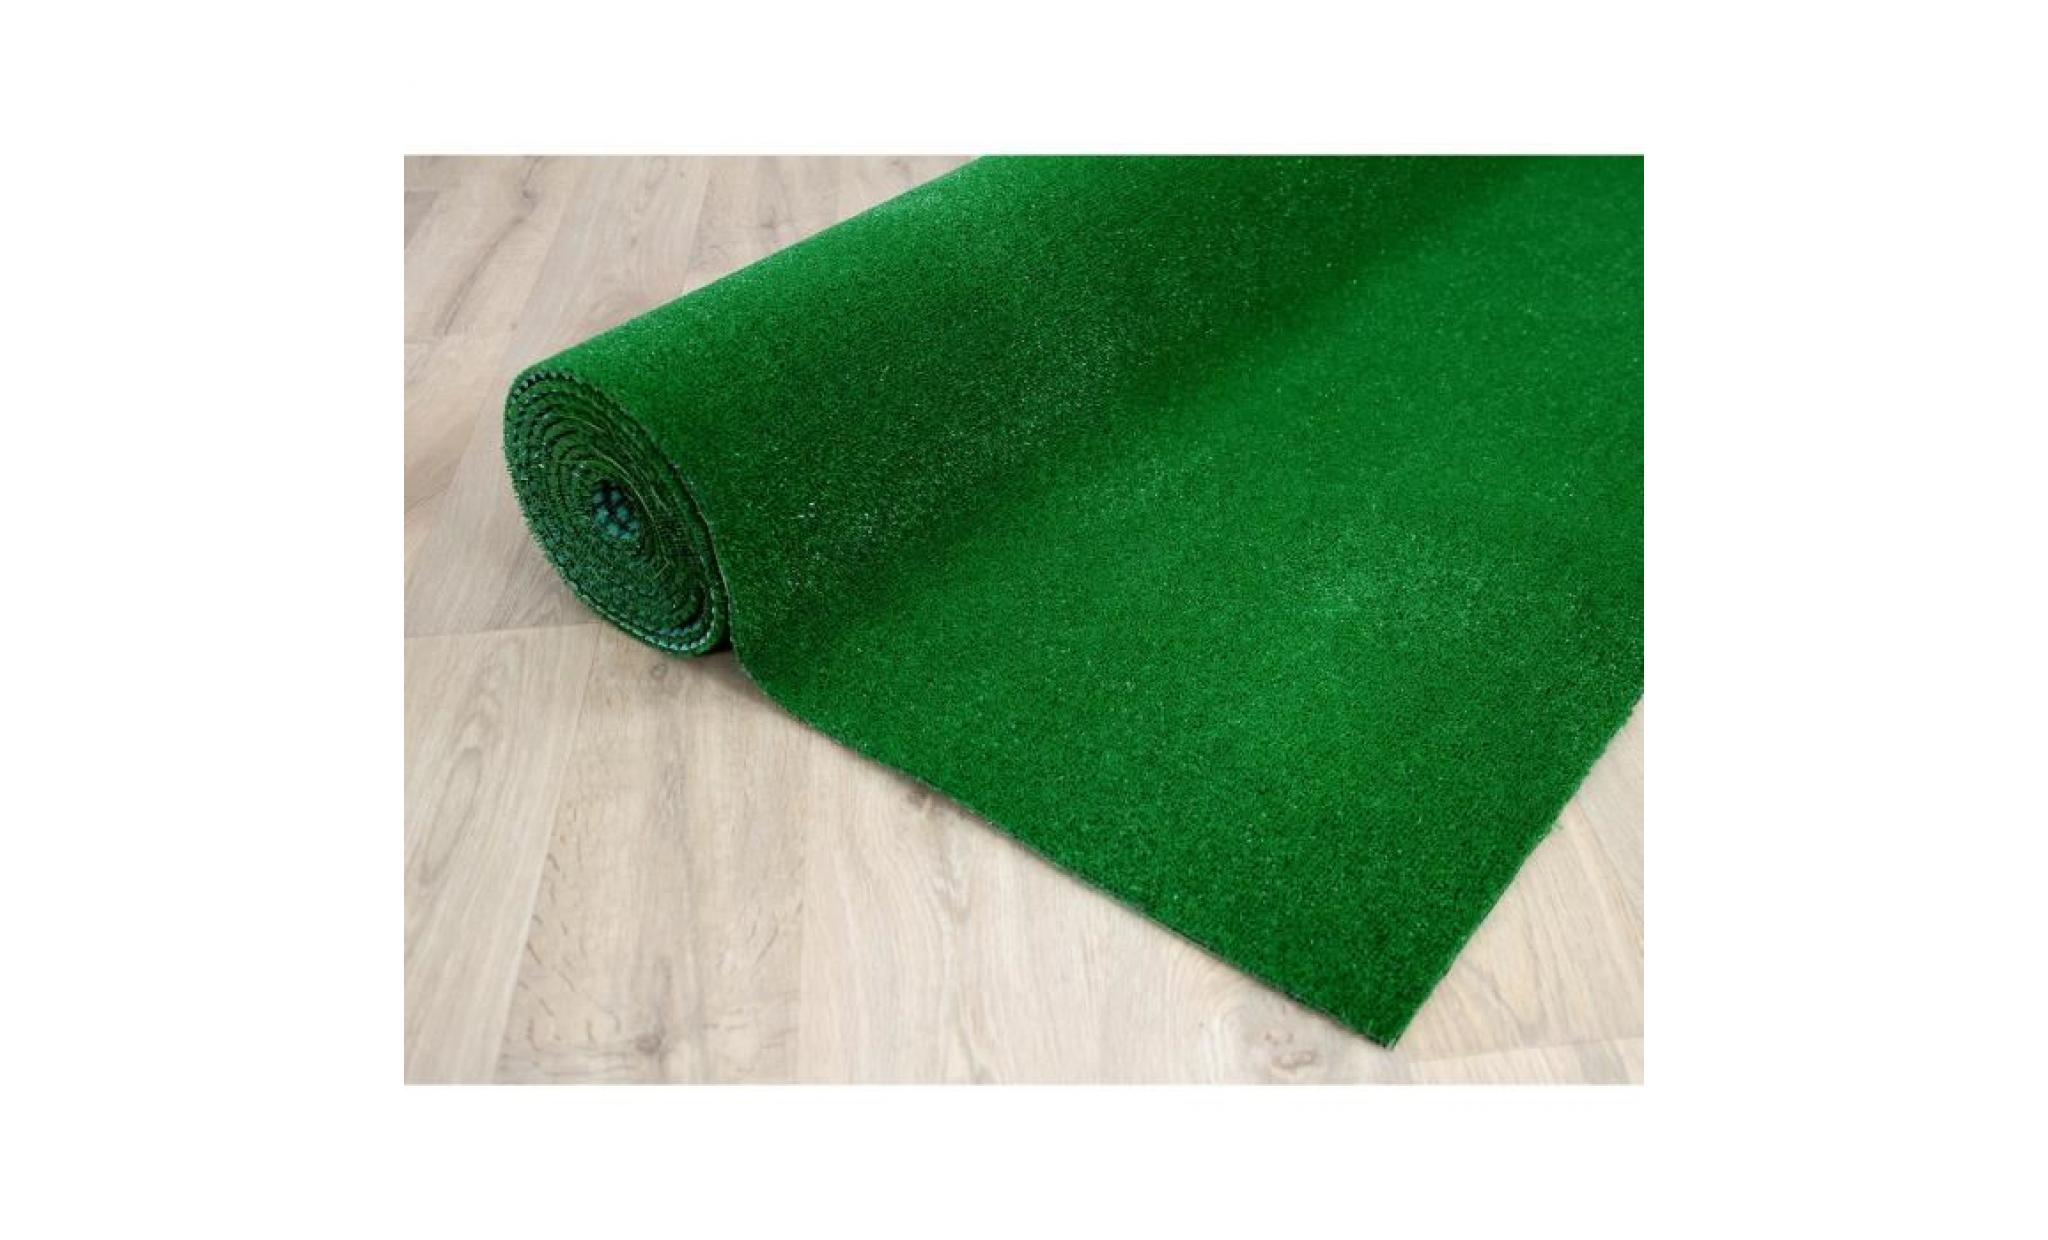 york   tapis type gazon artificiel avec nubs – pour jardin, terrasse, balcon   vert   [200x350 cm]